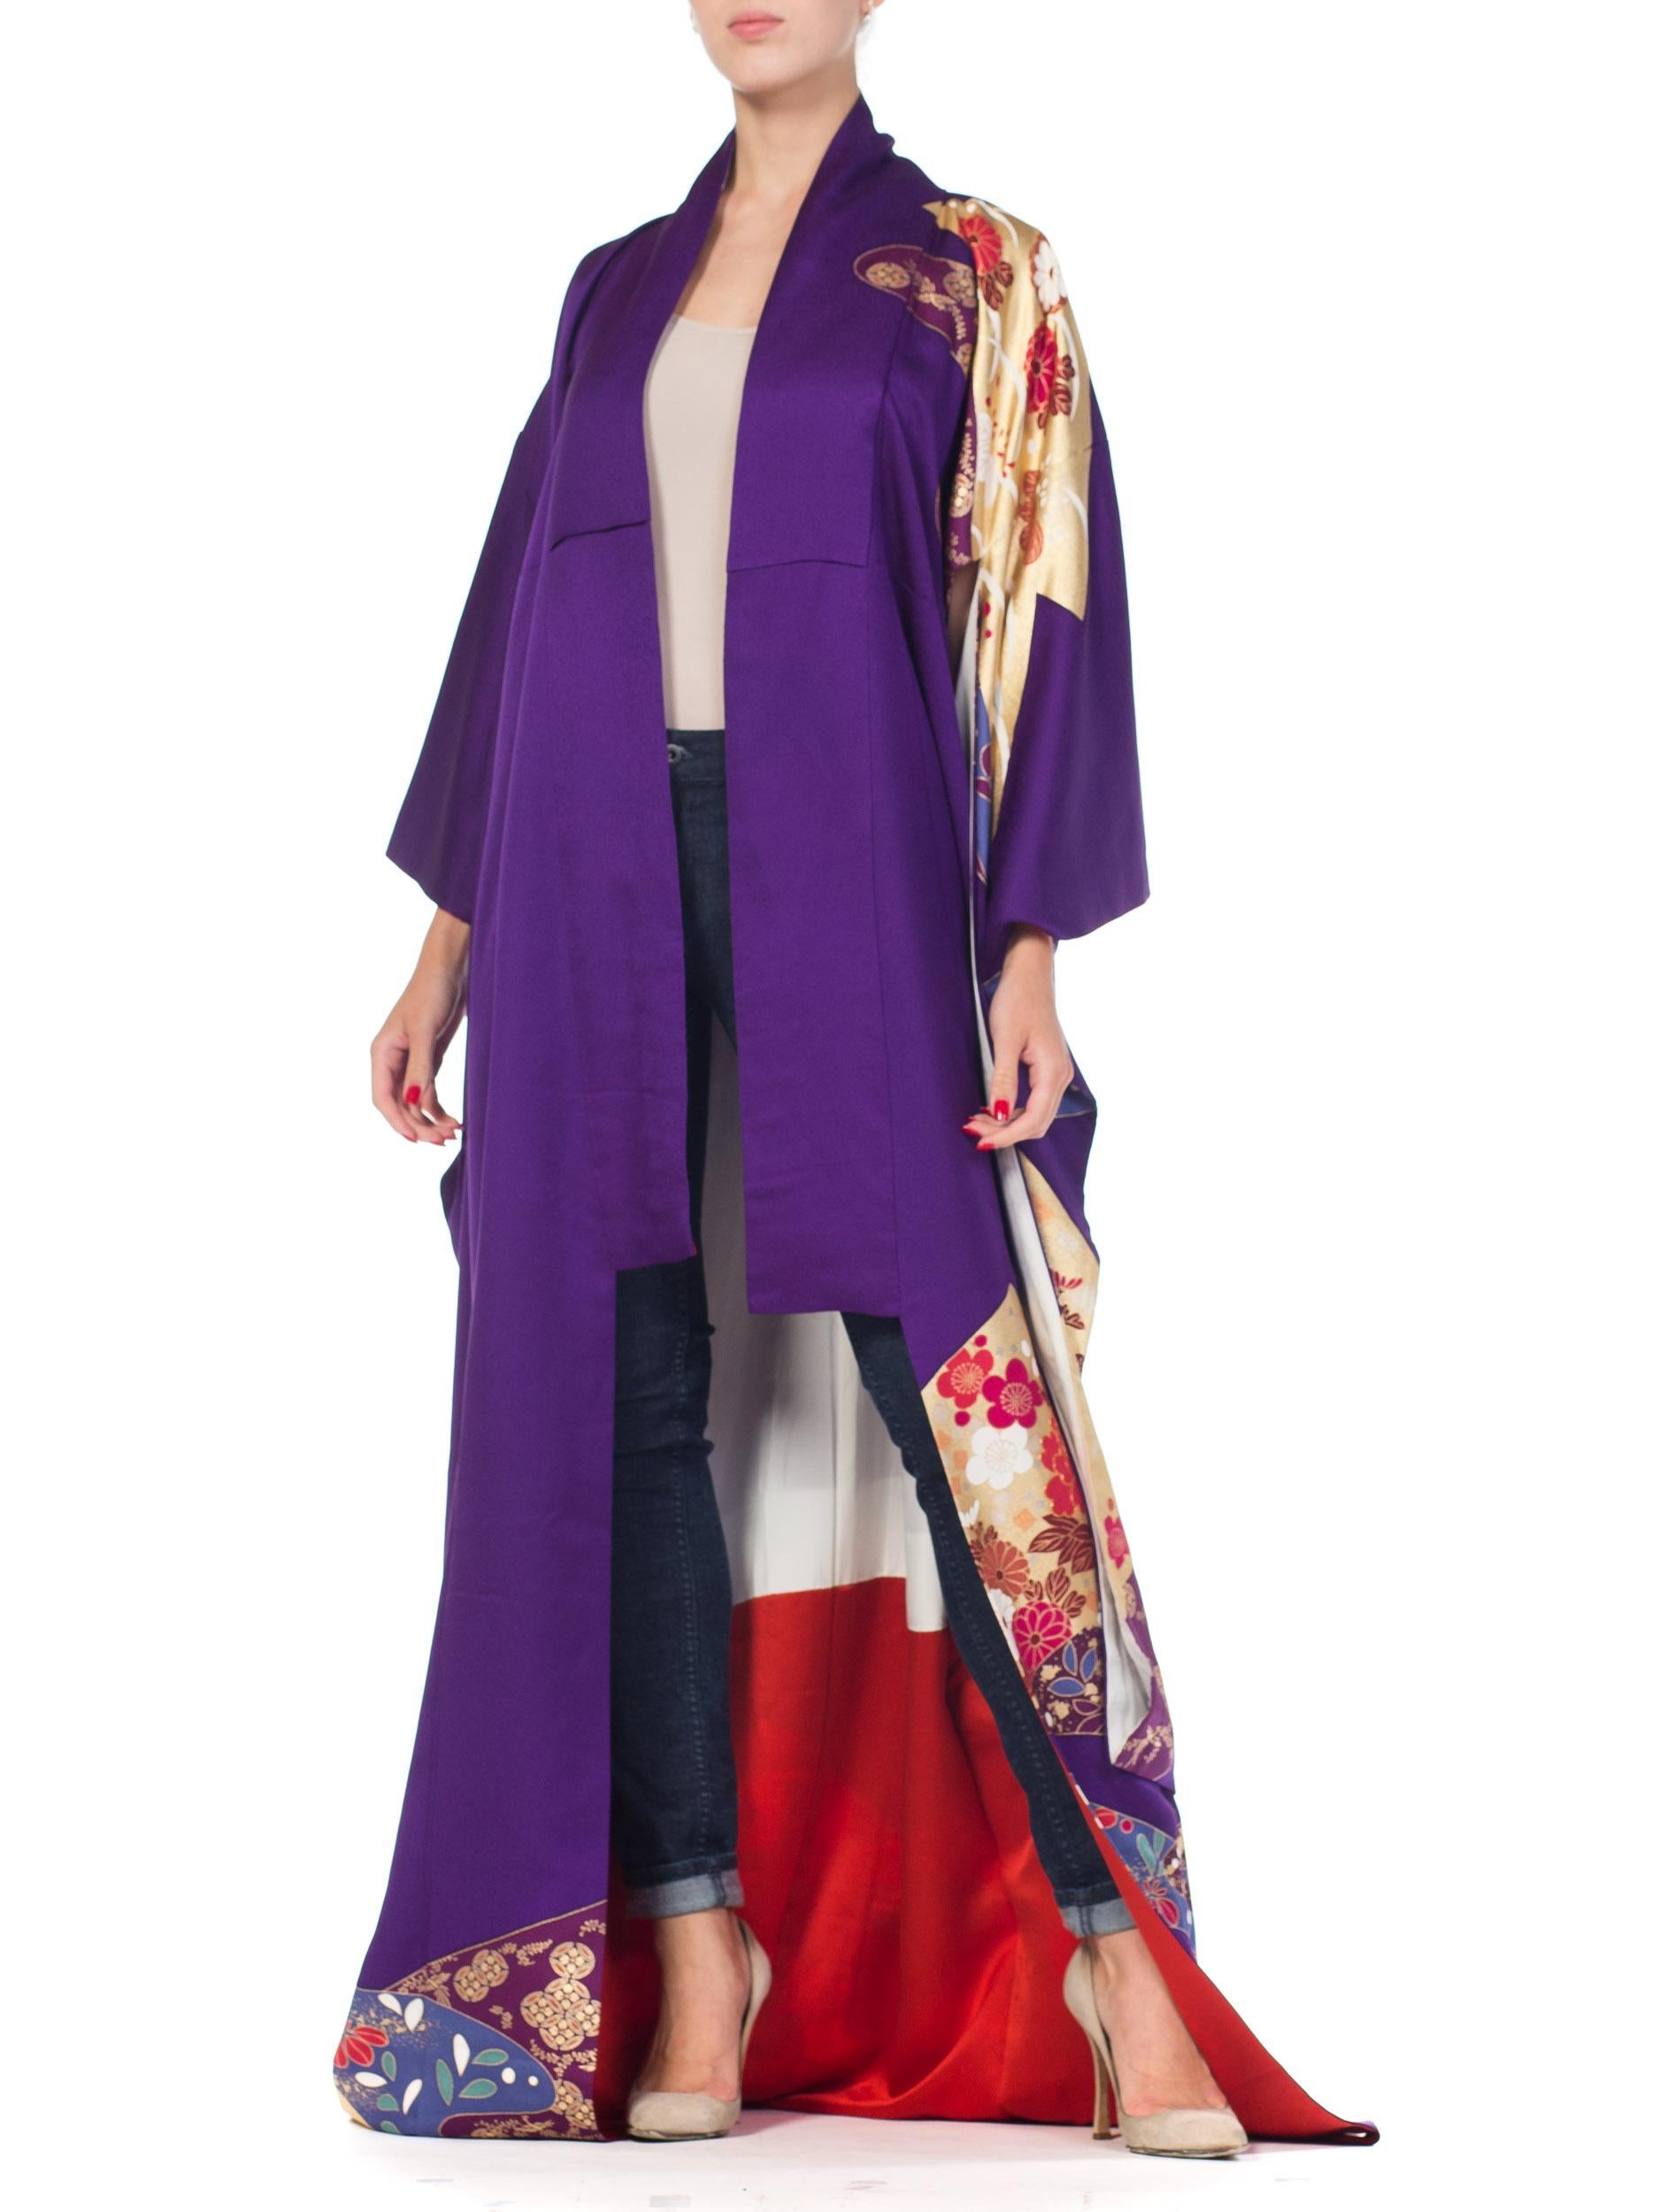 purple and gold kimono